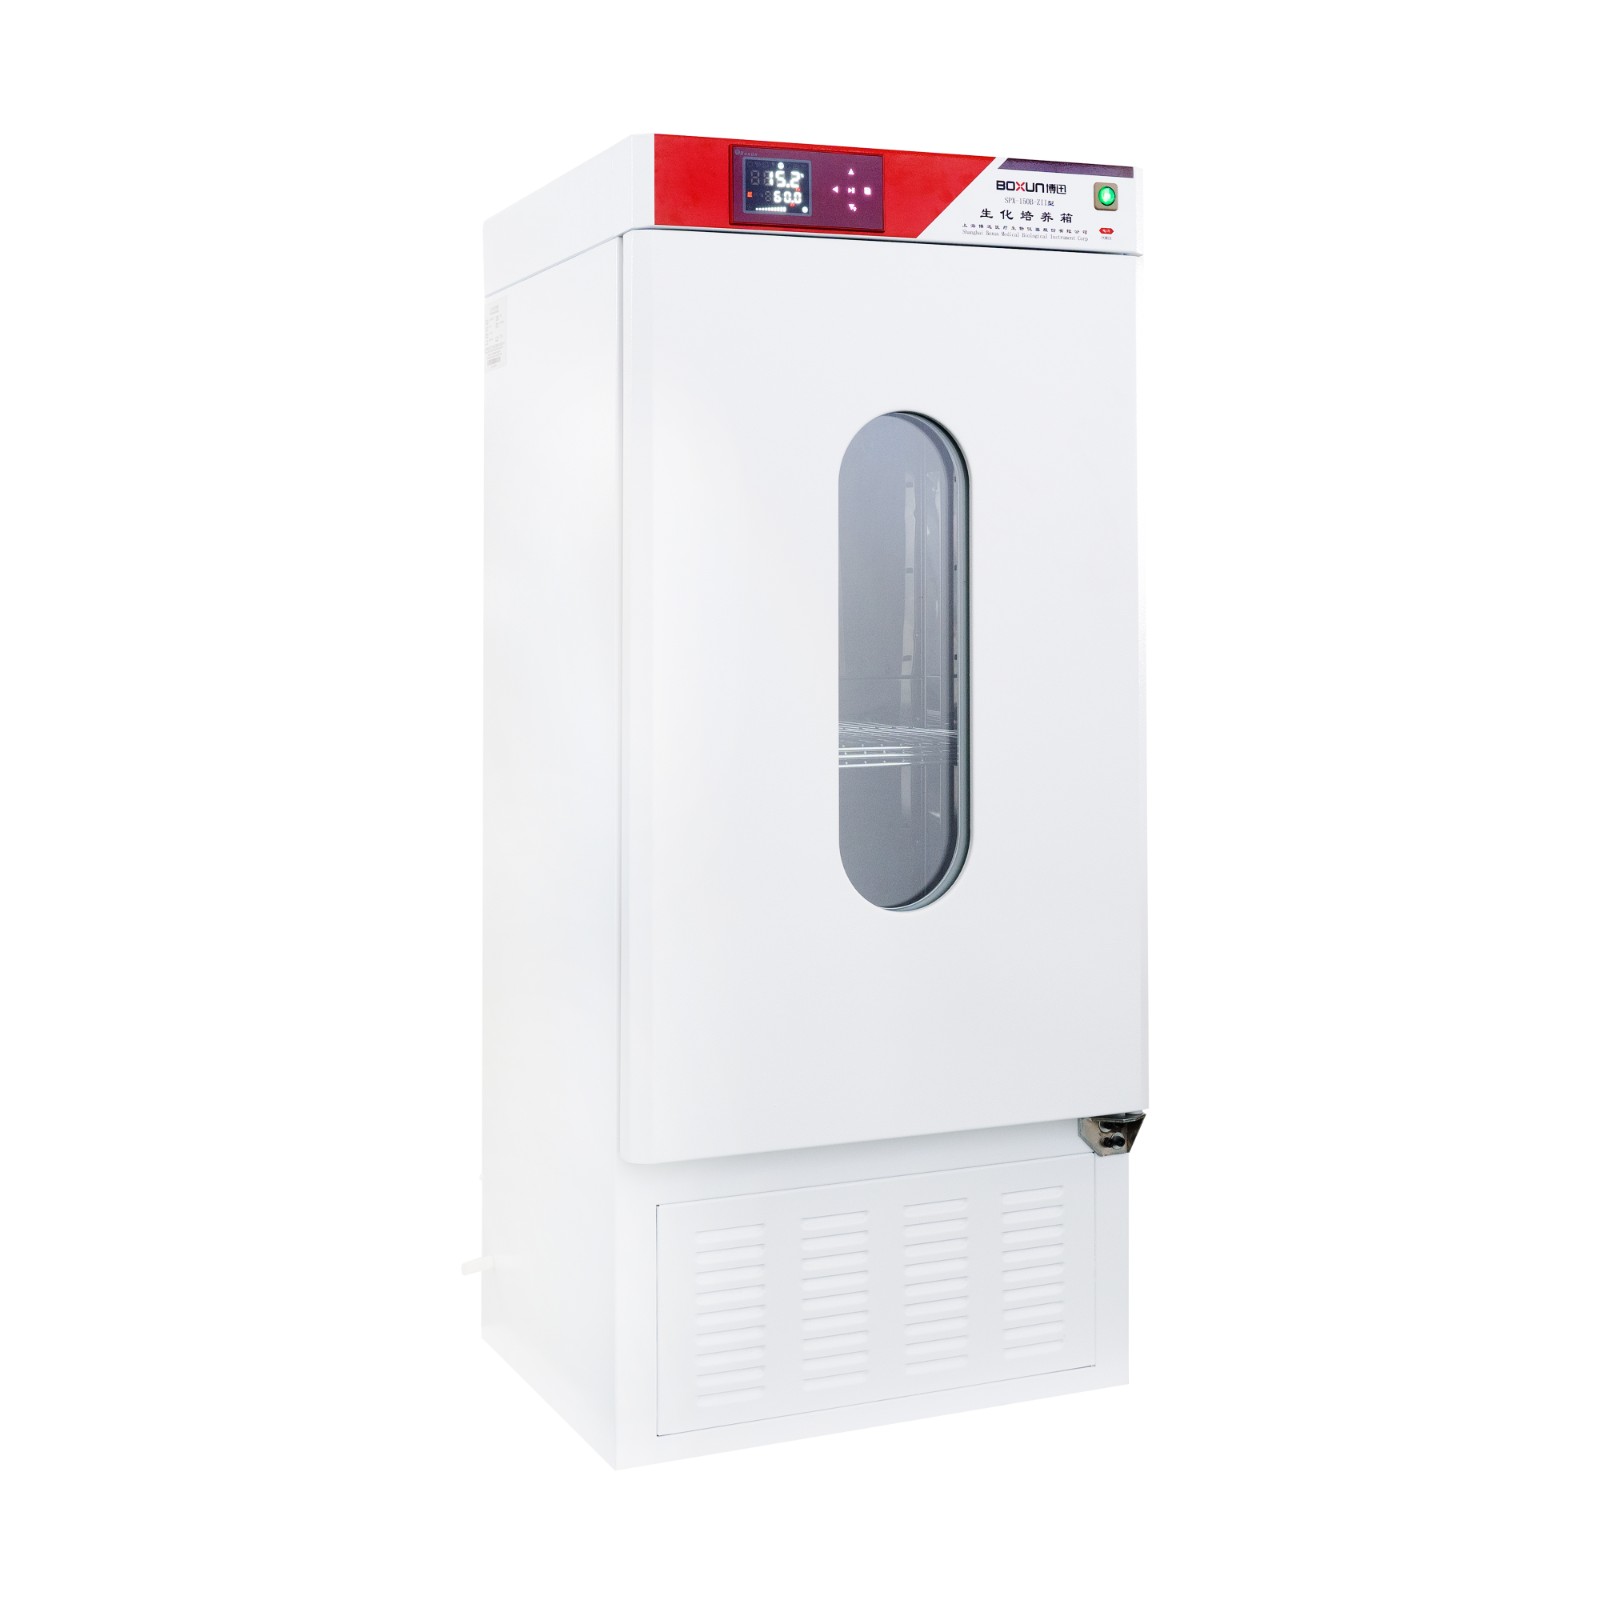 Produktfoto: Kühlinkubator 250 l Volumen mit Umluftkühlung